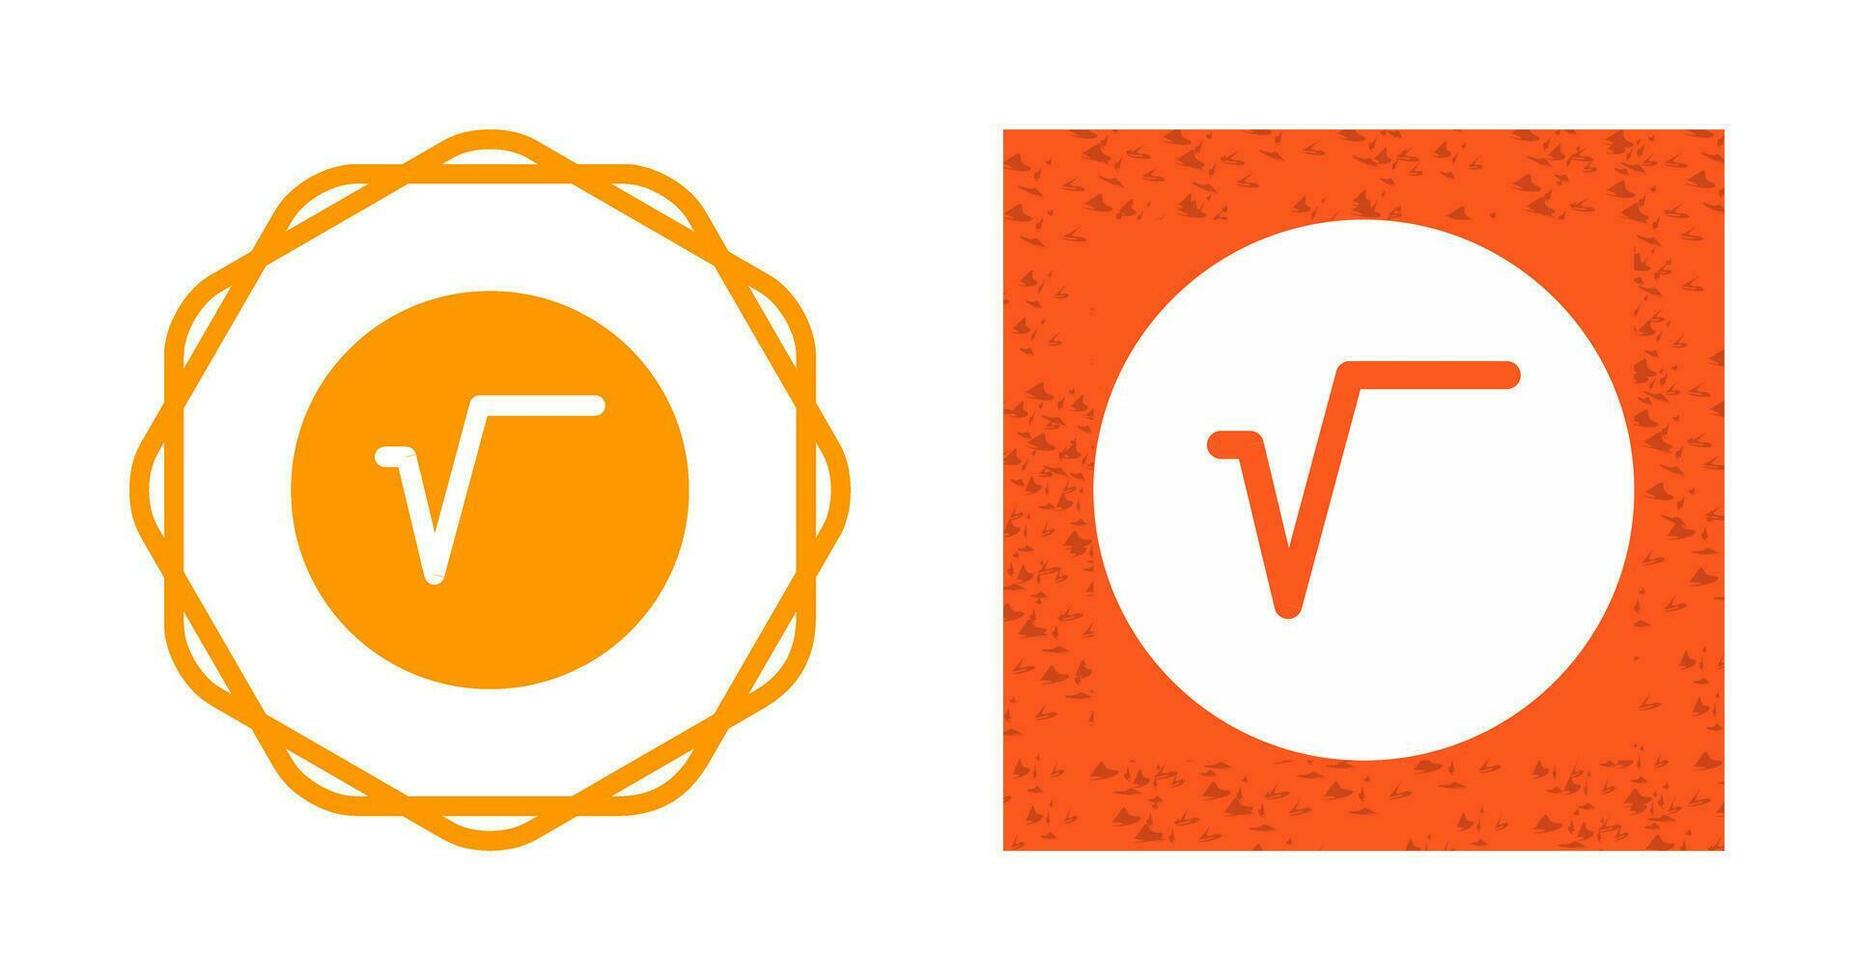 plein wortel symbool vector icoon